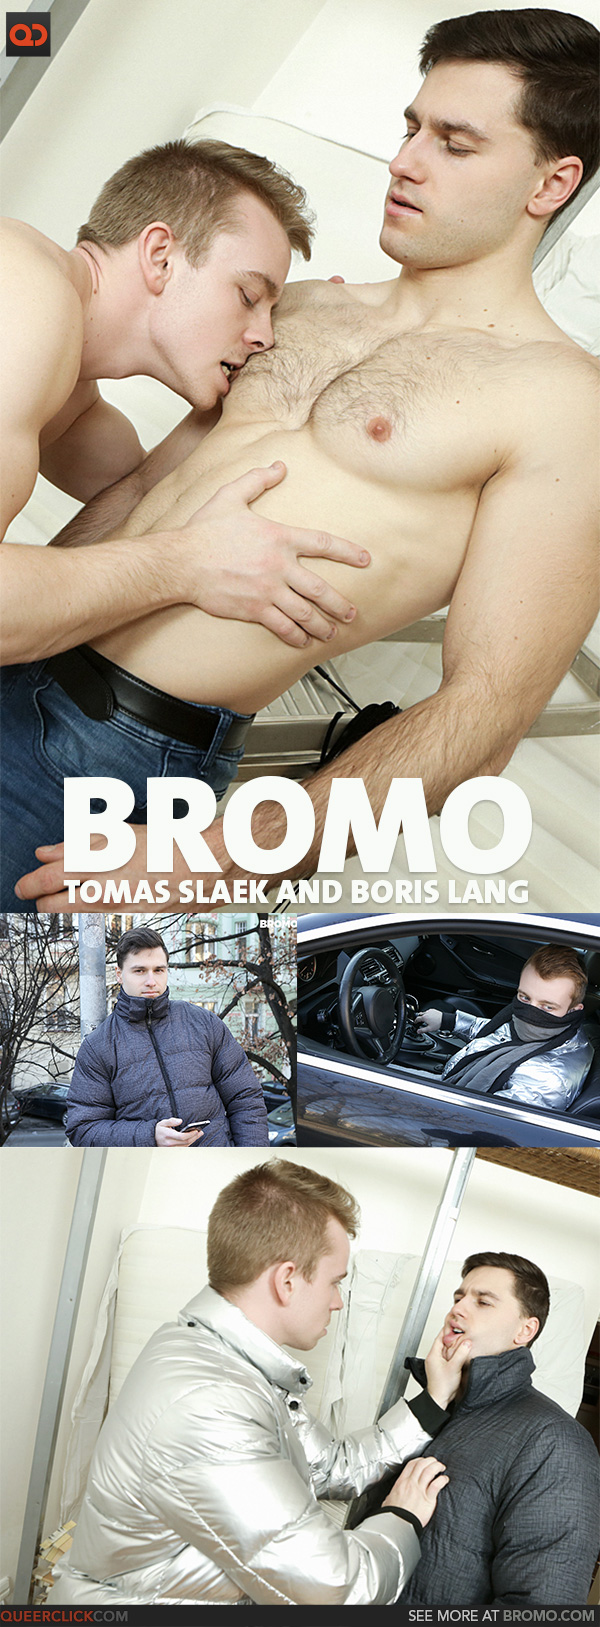 Bromo: Tomas Slaek and Boris Lang